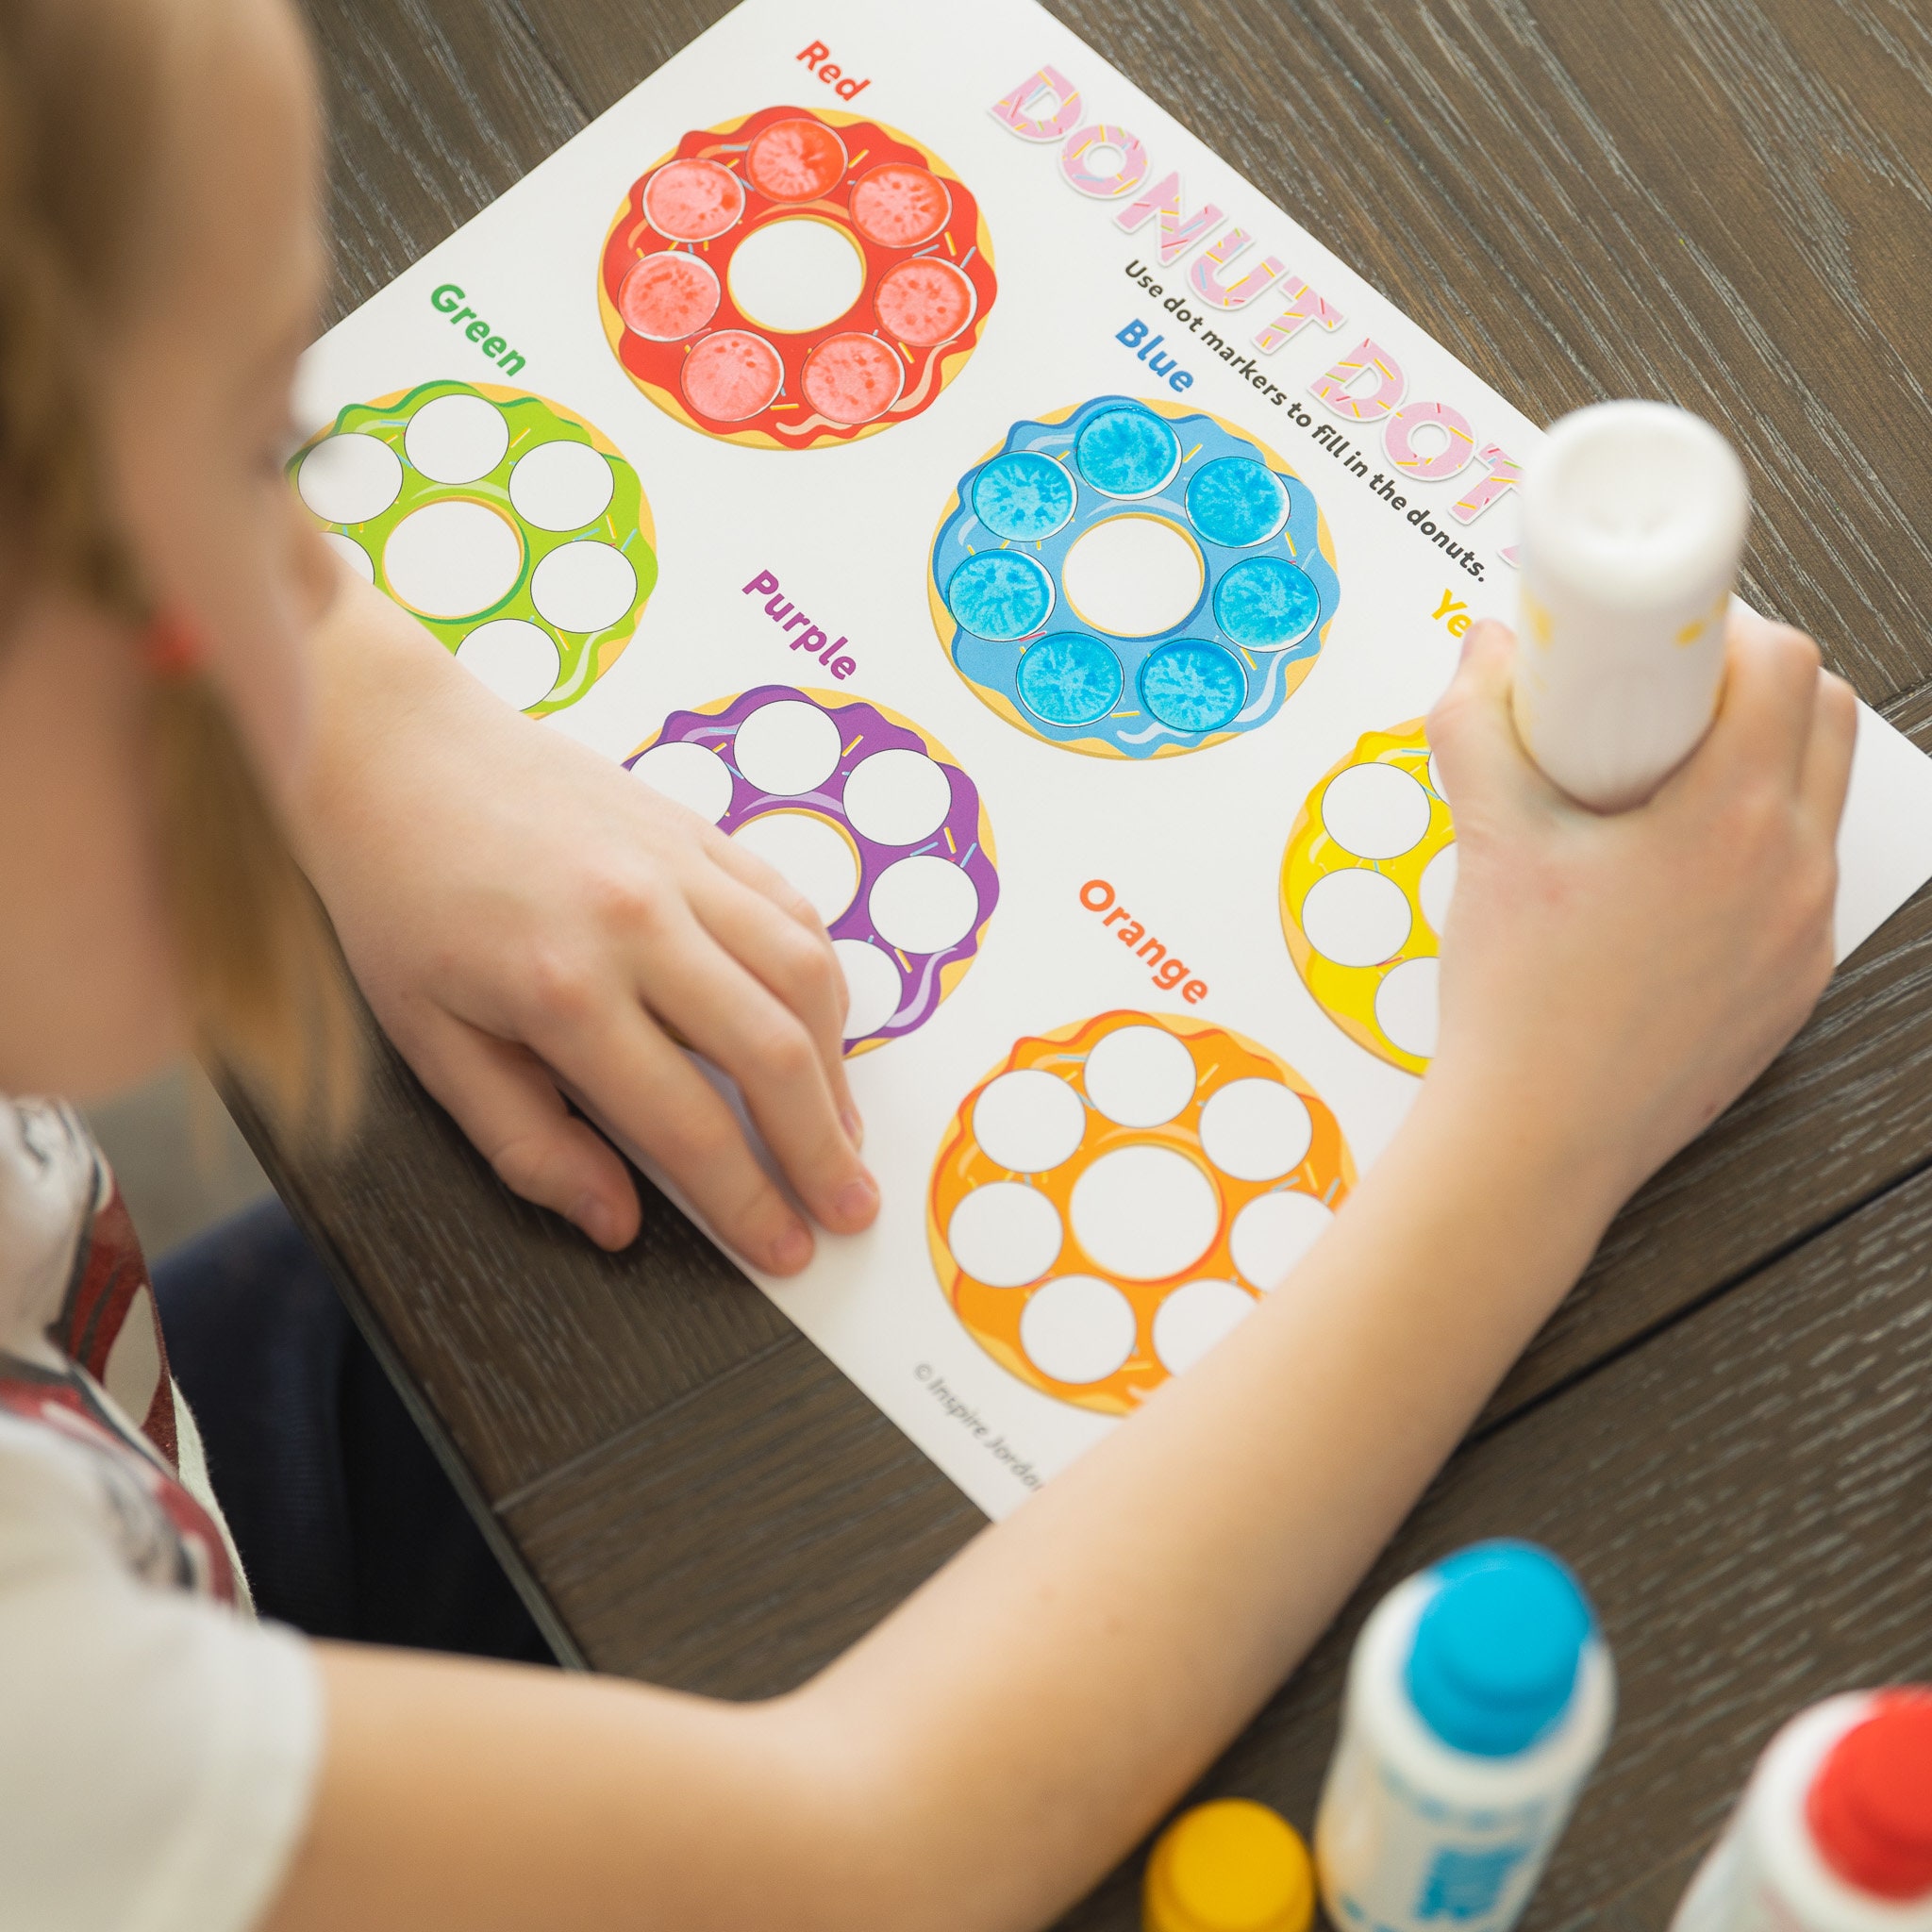 Do a Dot Donut Color Printable. Dot Marker Printable. Pom Pom Activity.  Preschool Art Project. Toddler Coloring. Dot Marker Color Learning. 